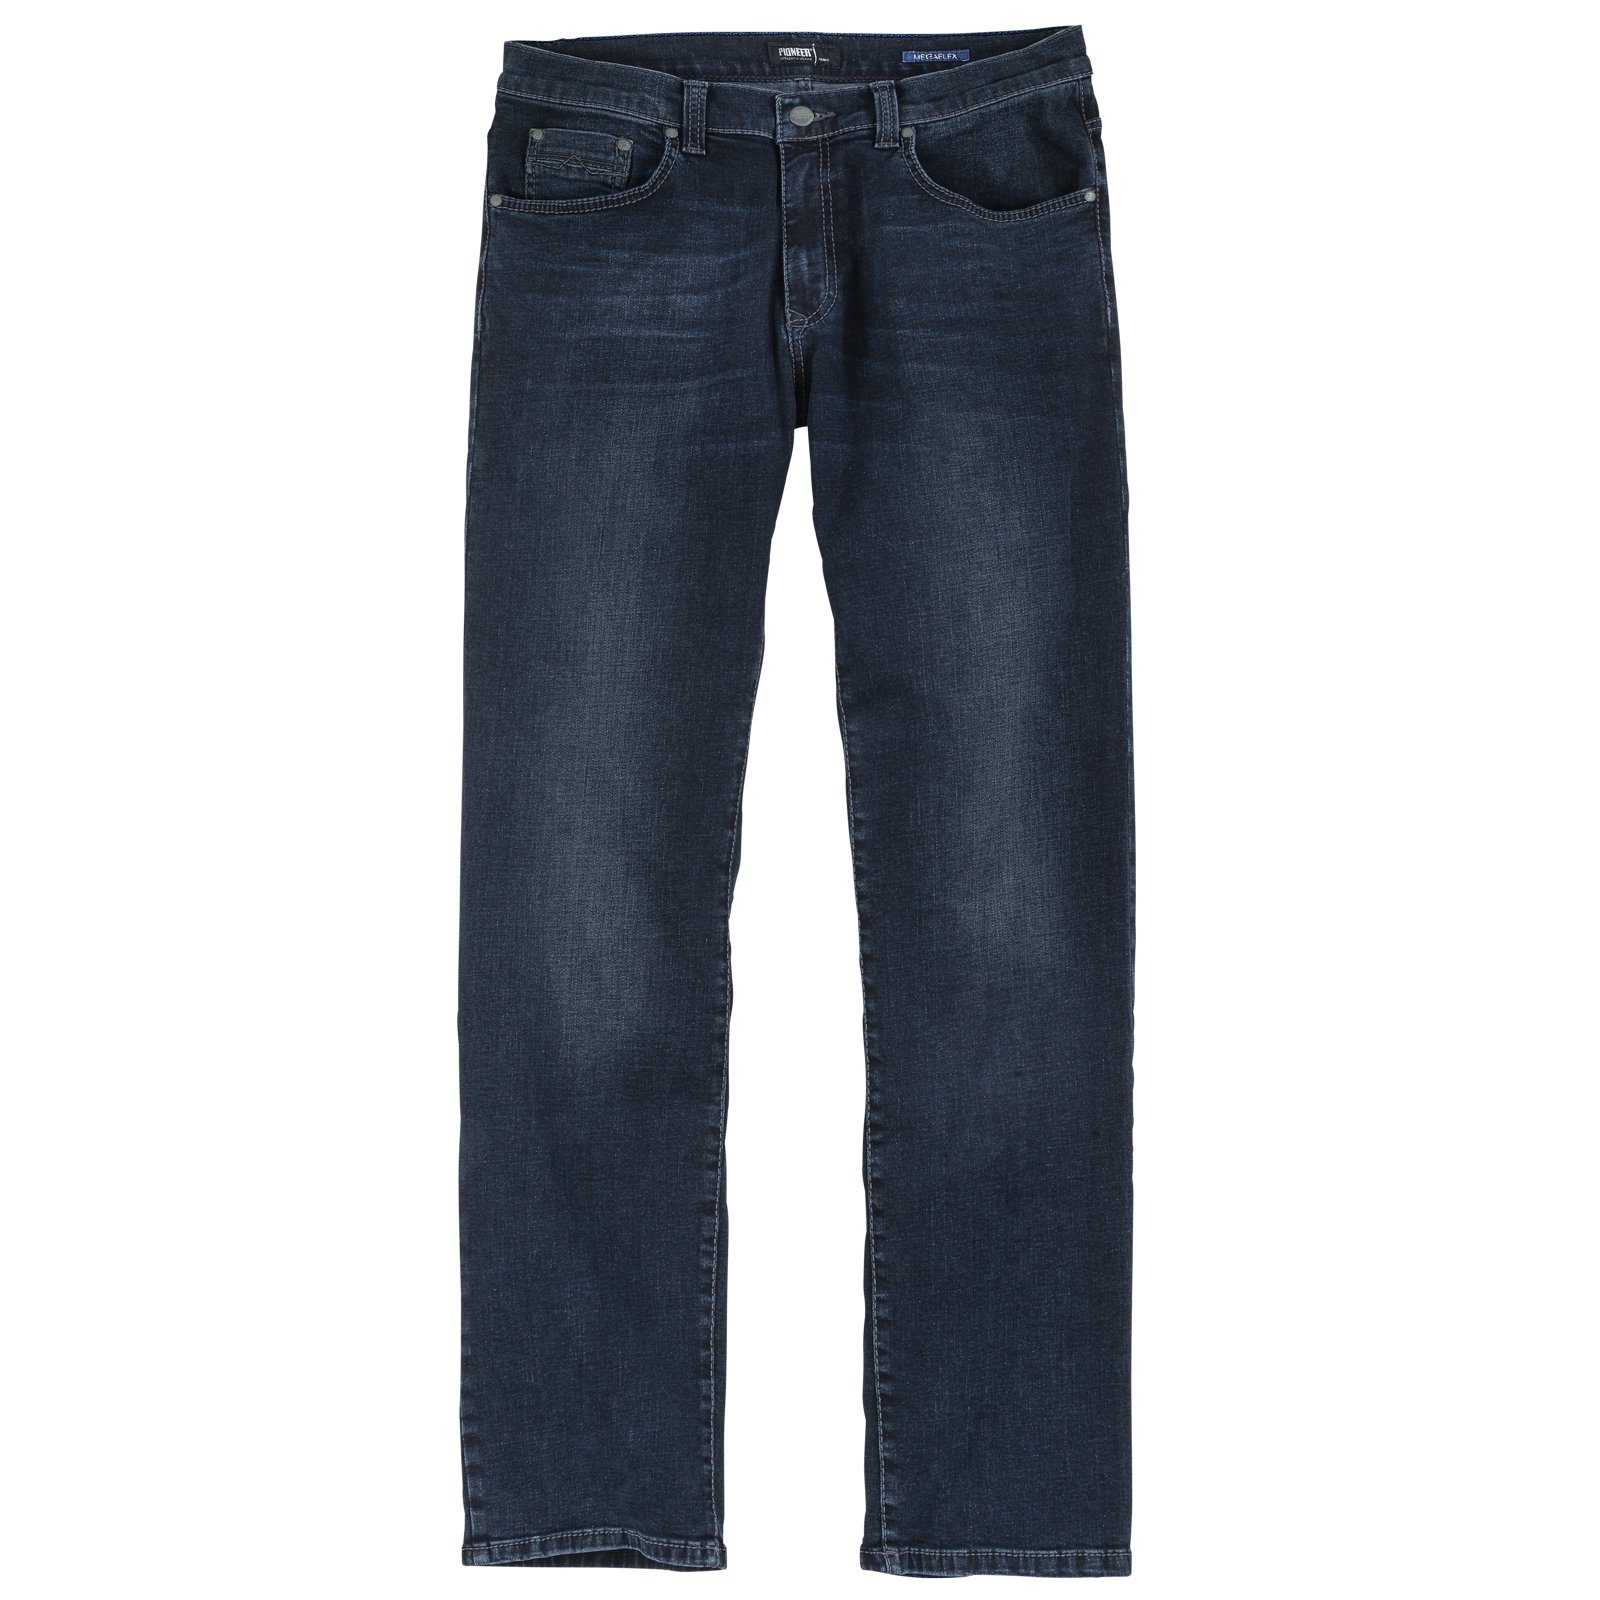 Jeans blue/black Bequeme Größen buffies Pioneer Rando Stretch-Jeans used Große Pionier